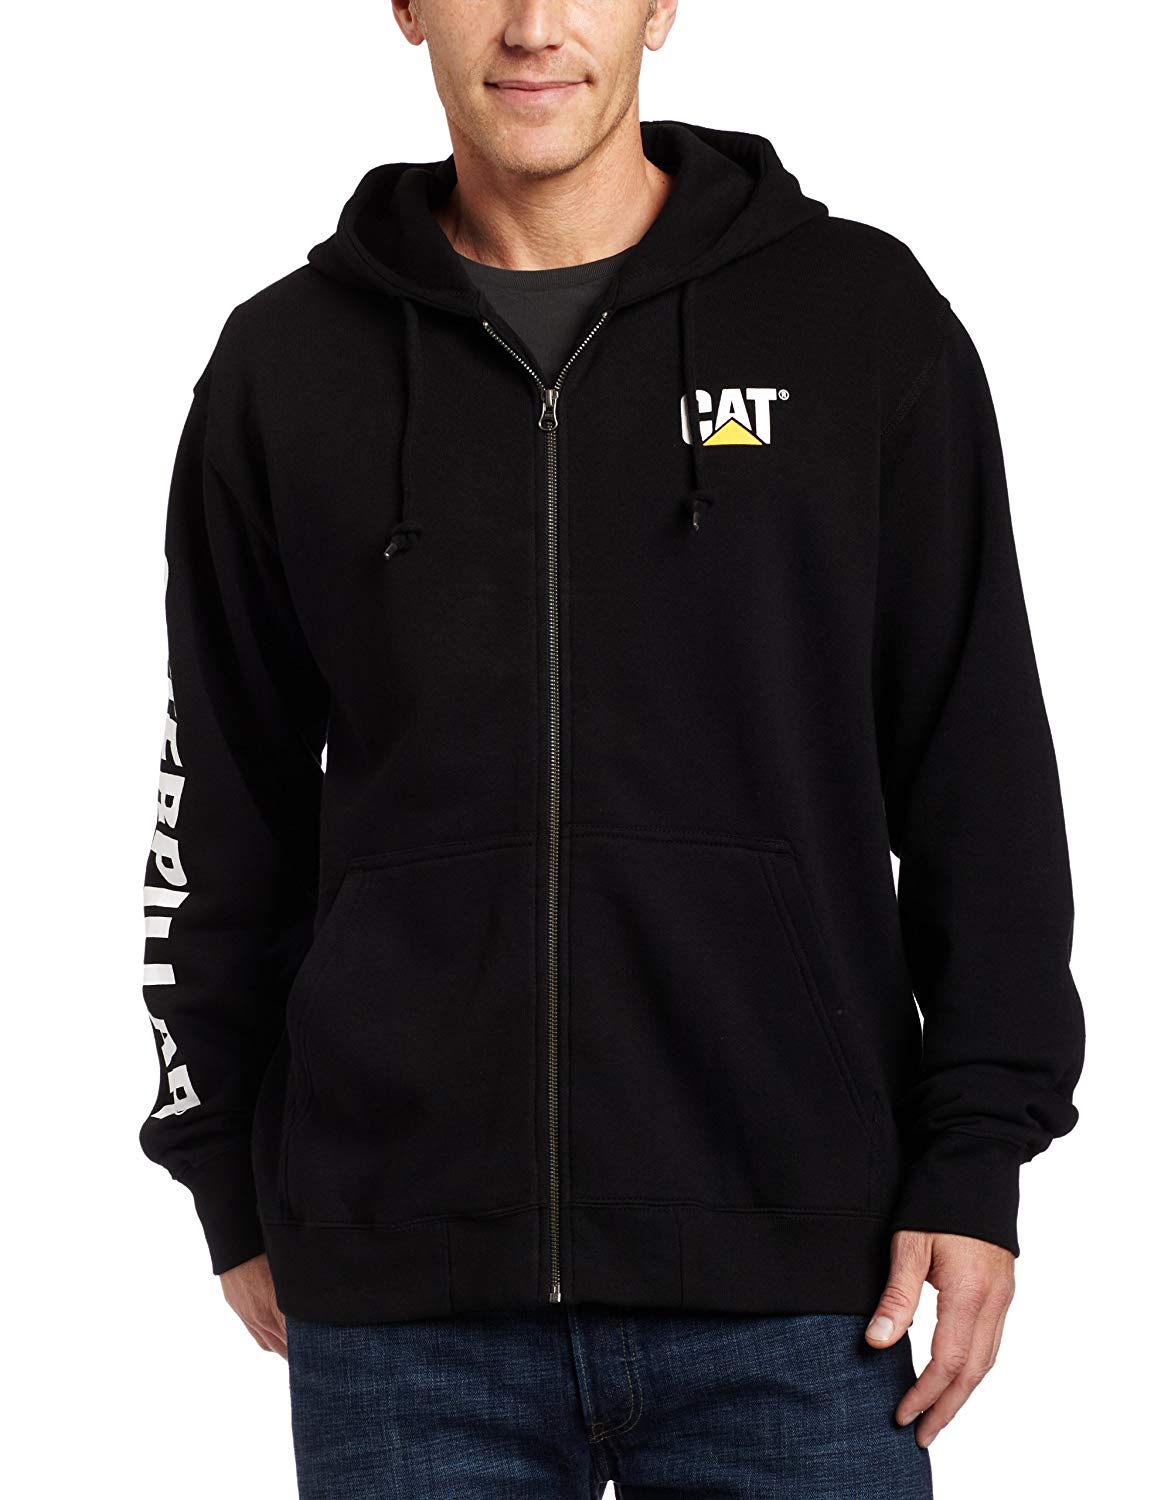 CAT W10840-016-L Full Zip Hooded Sweatshirt, Black, Large